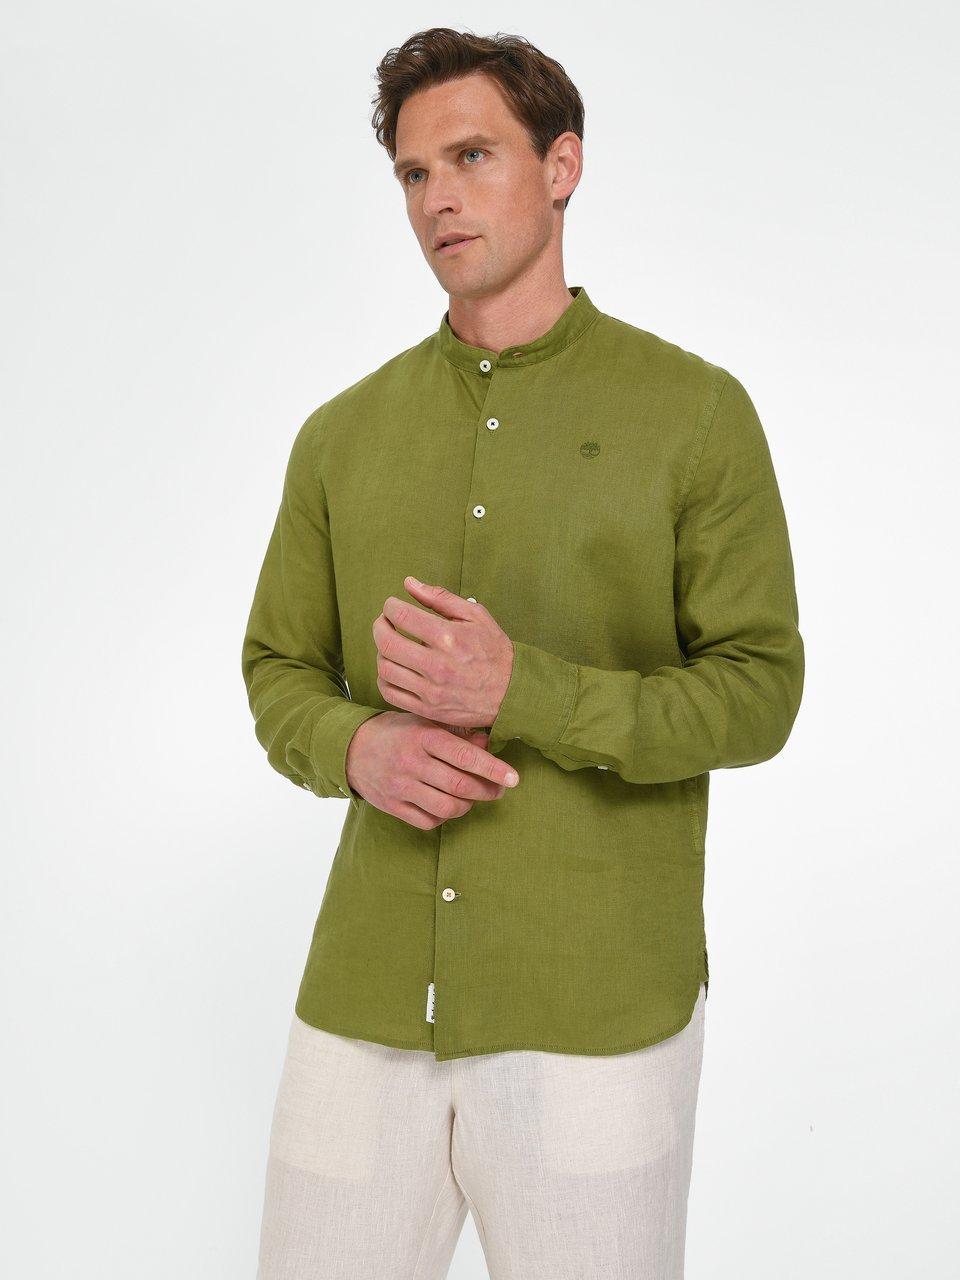 Timberland - La chemise